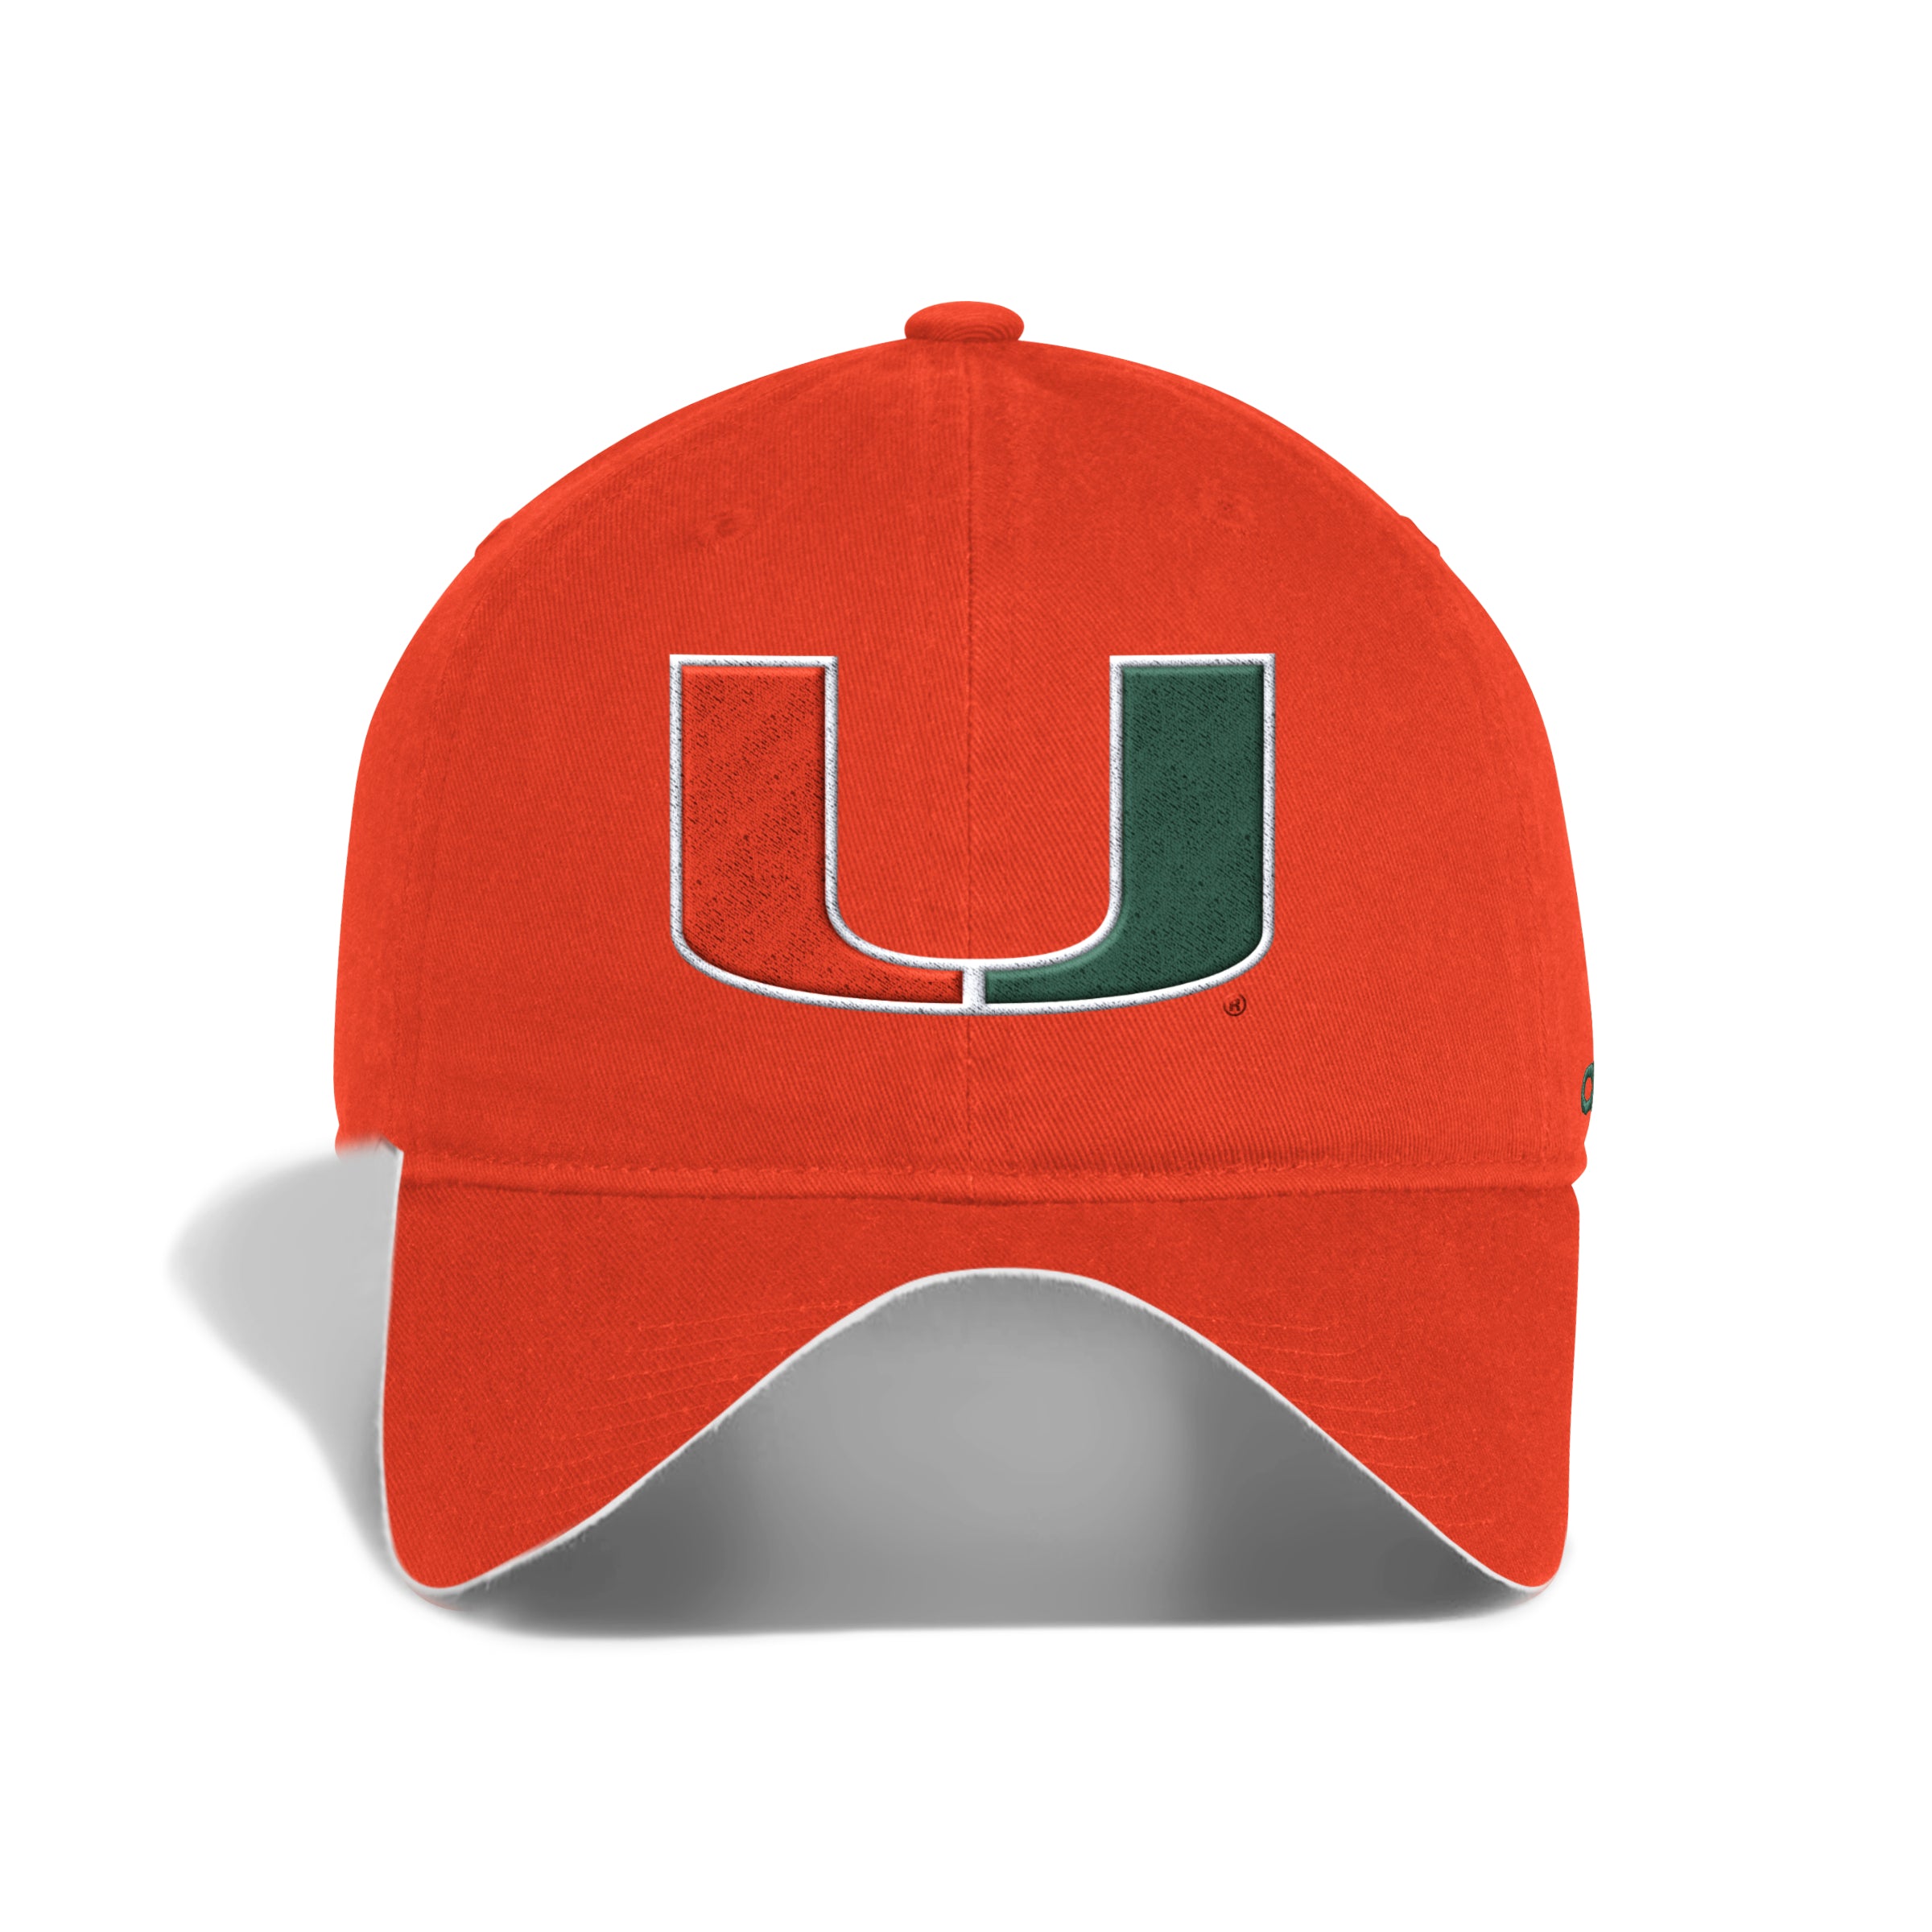 Miami Hurricanes adidas Coaches Adjustable Slough Hat - Orange